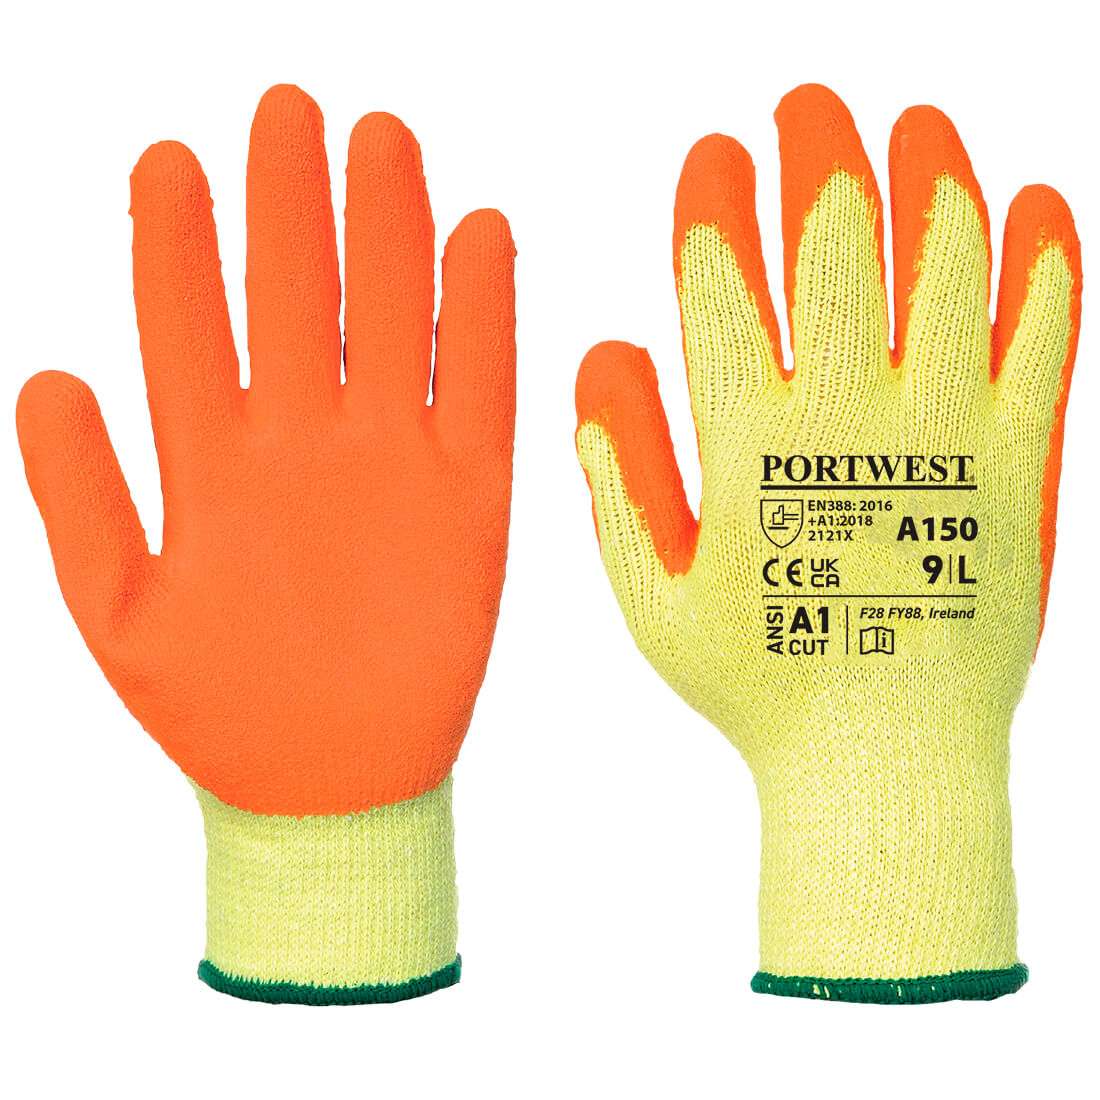 General Handler Glove Latex Coated (Orange) Size L - 12 Pack